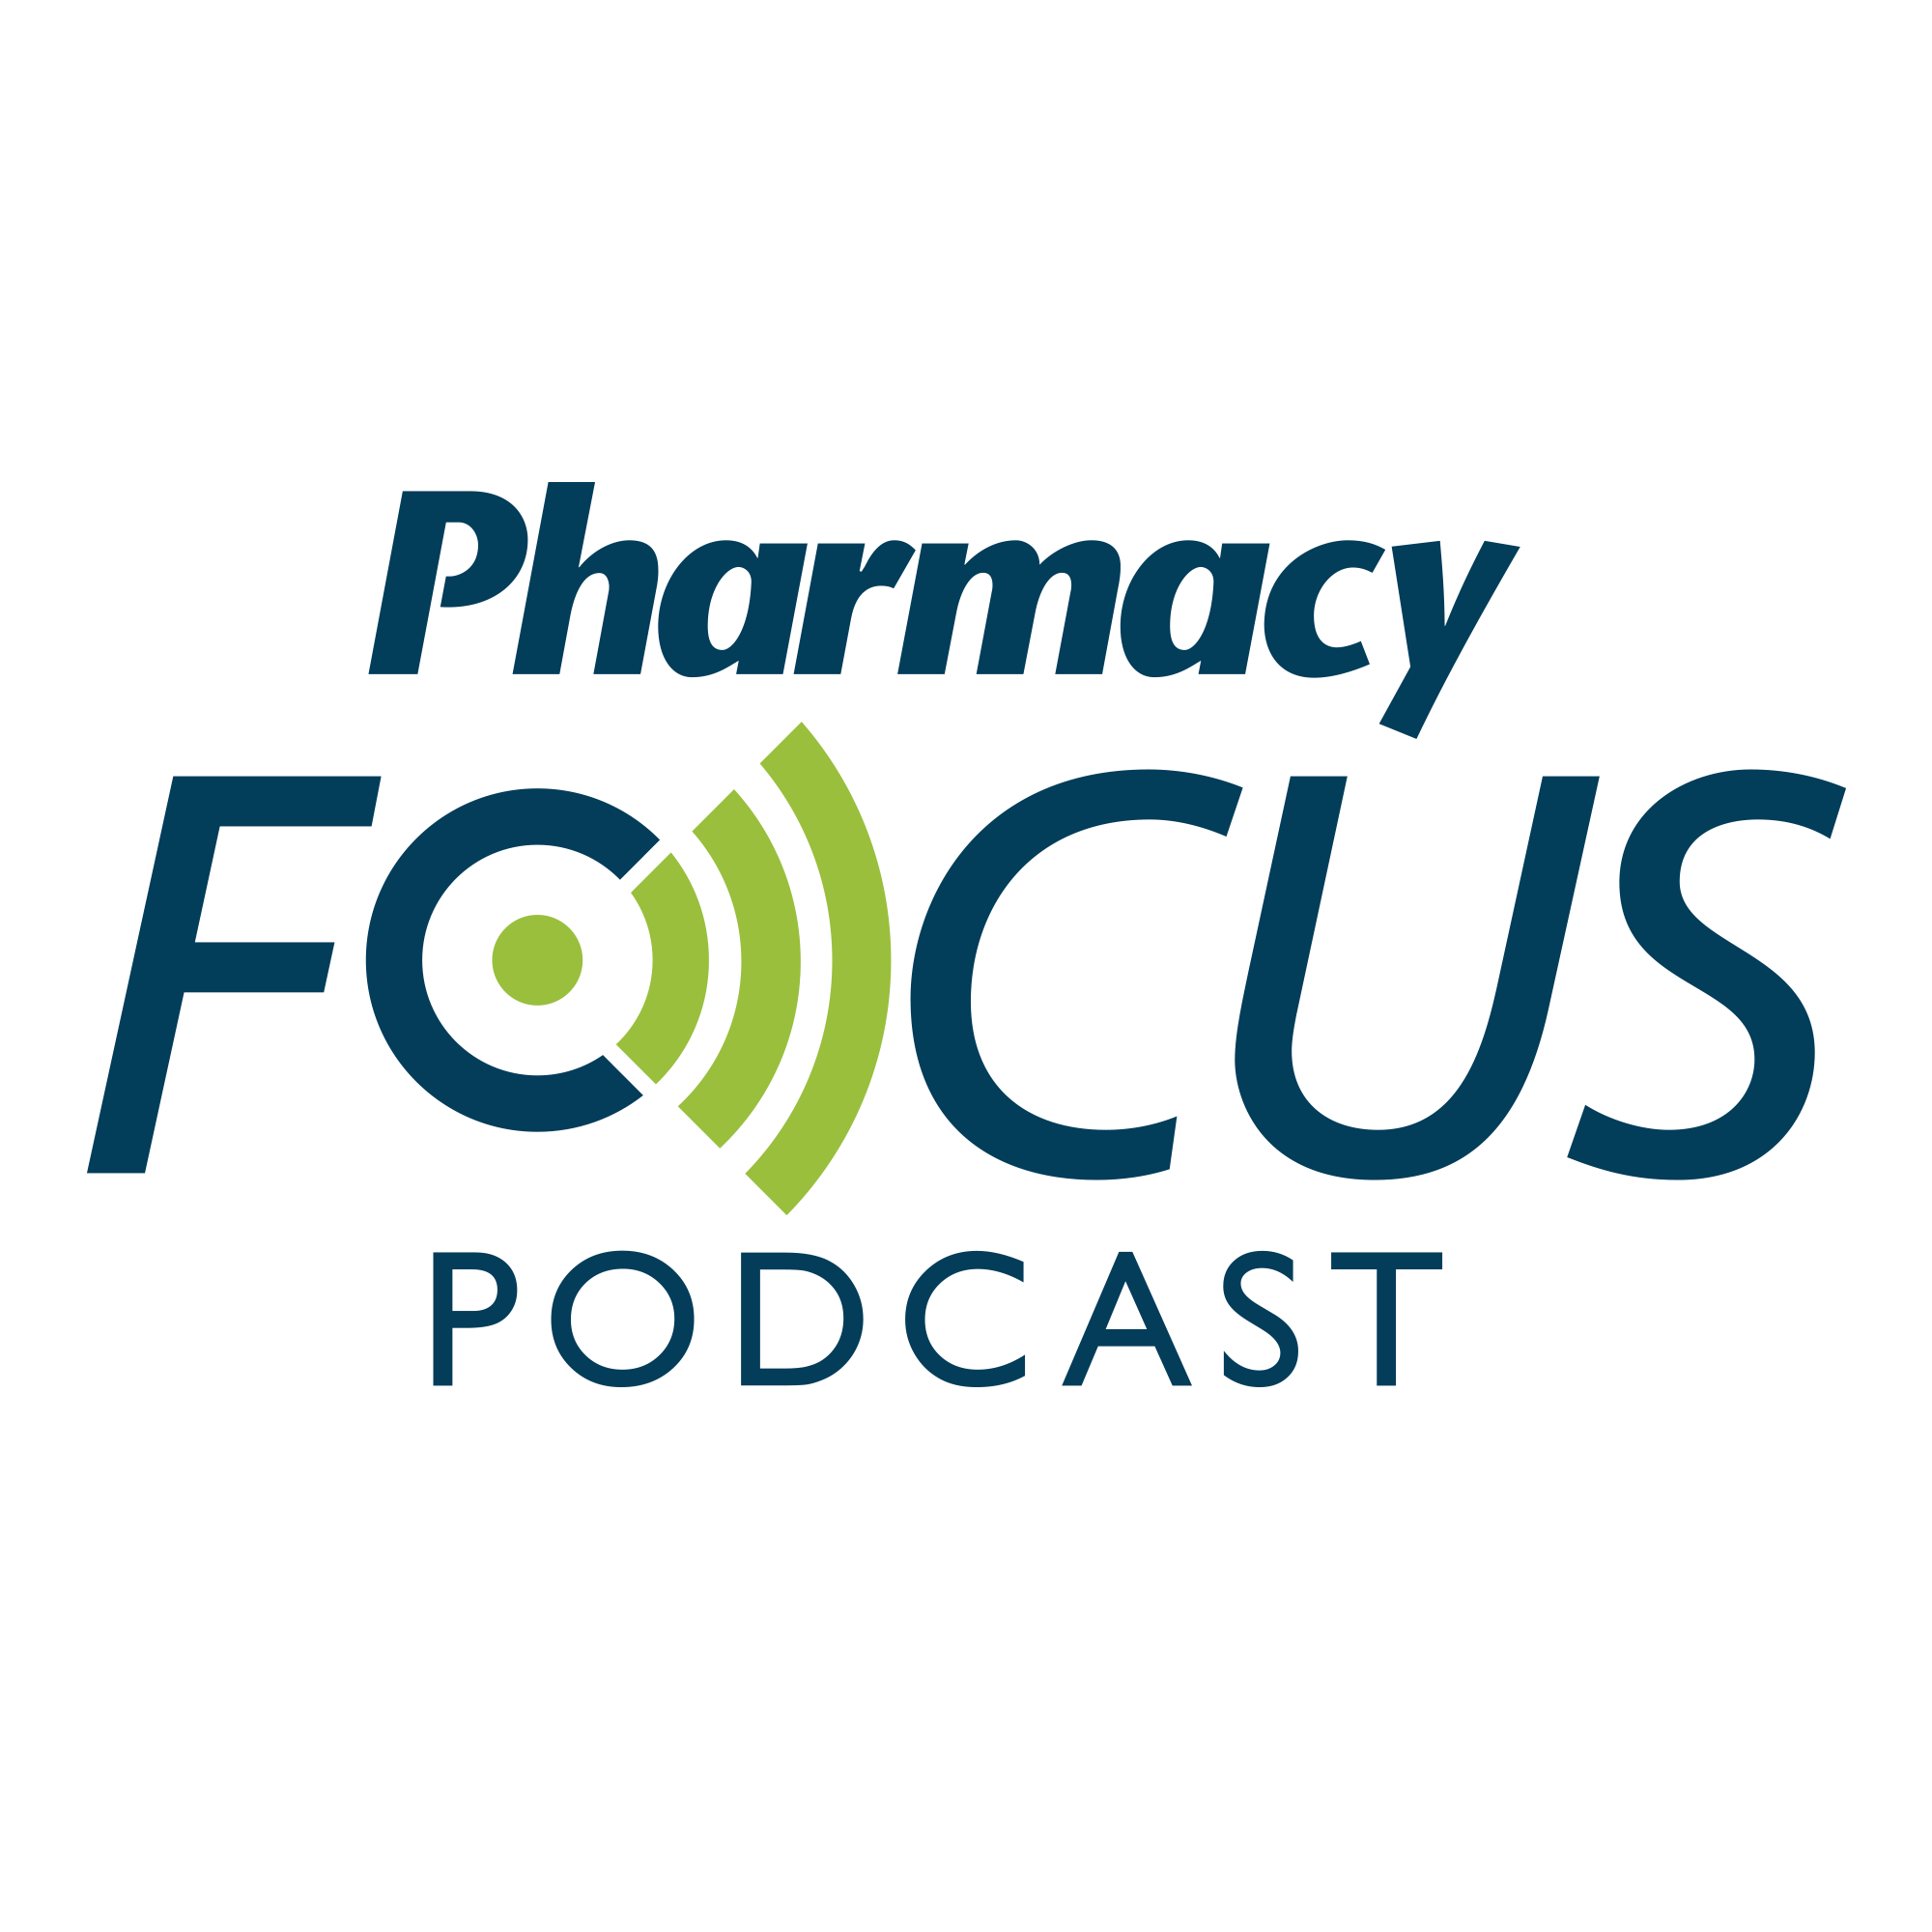 Pharmacy Focus: Turning the Tide On Obesity - Episode 2